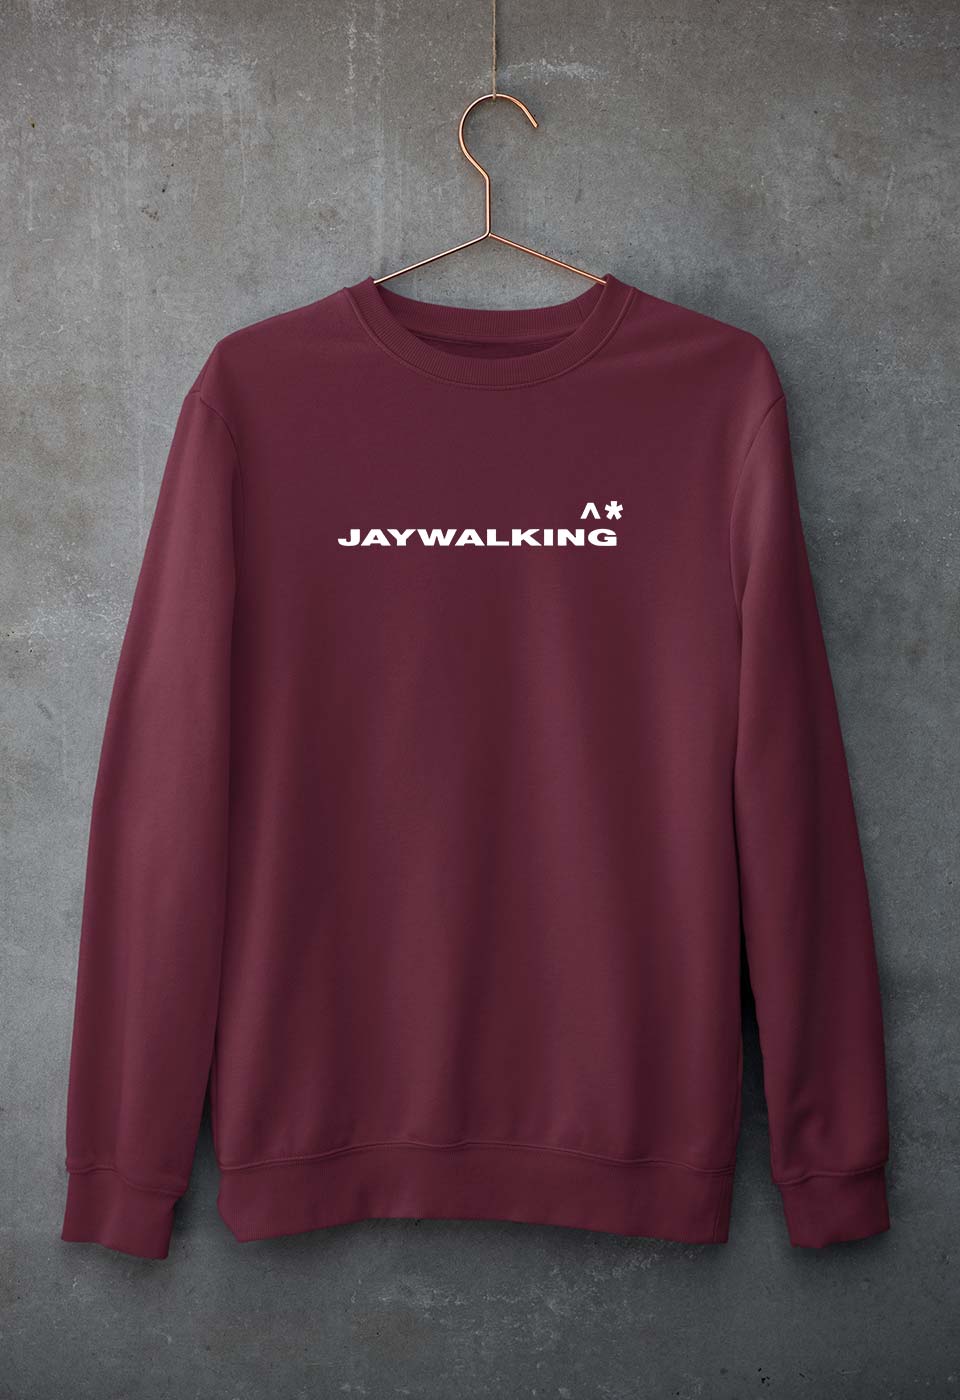 Jaywalking Unisex Sweatshirt for Men/Women